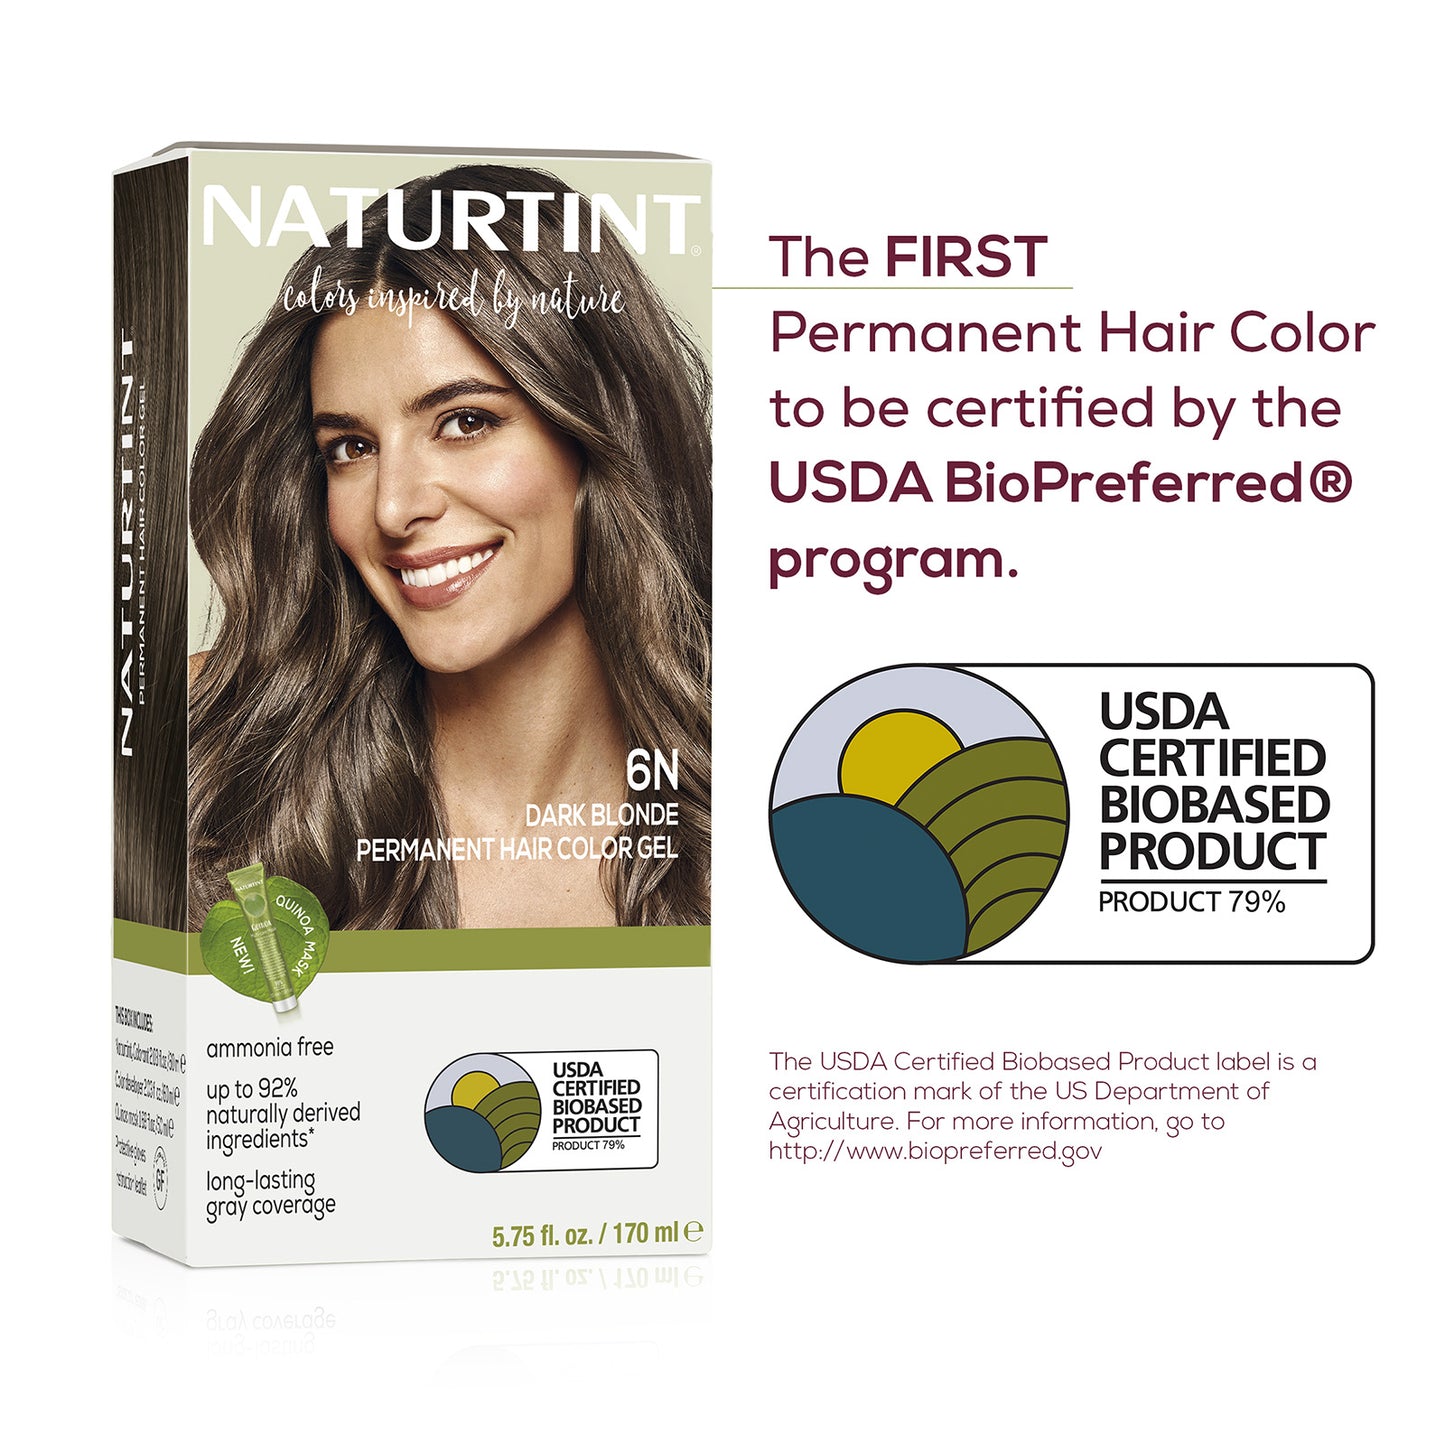 Naturtint Permanent Hair Color 6N Dark Blonde (Packaging may vary)